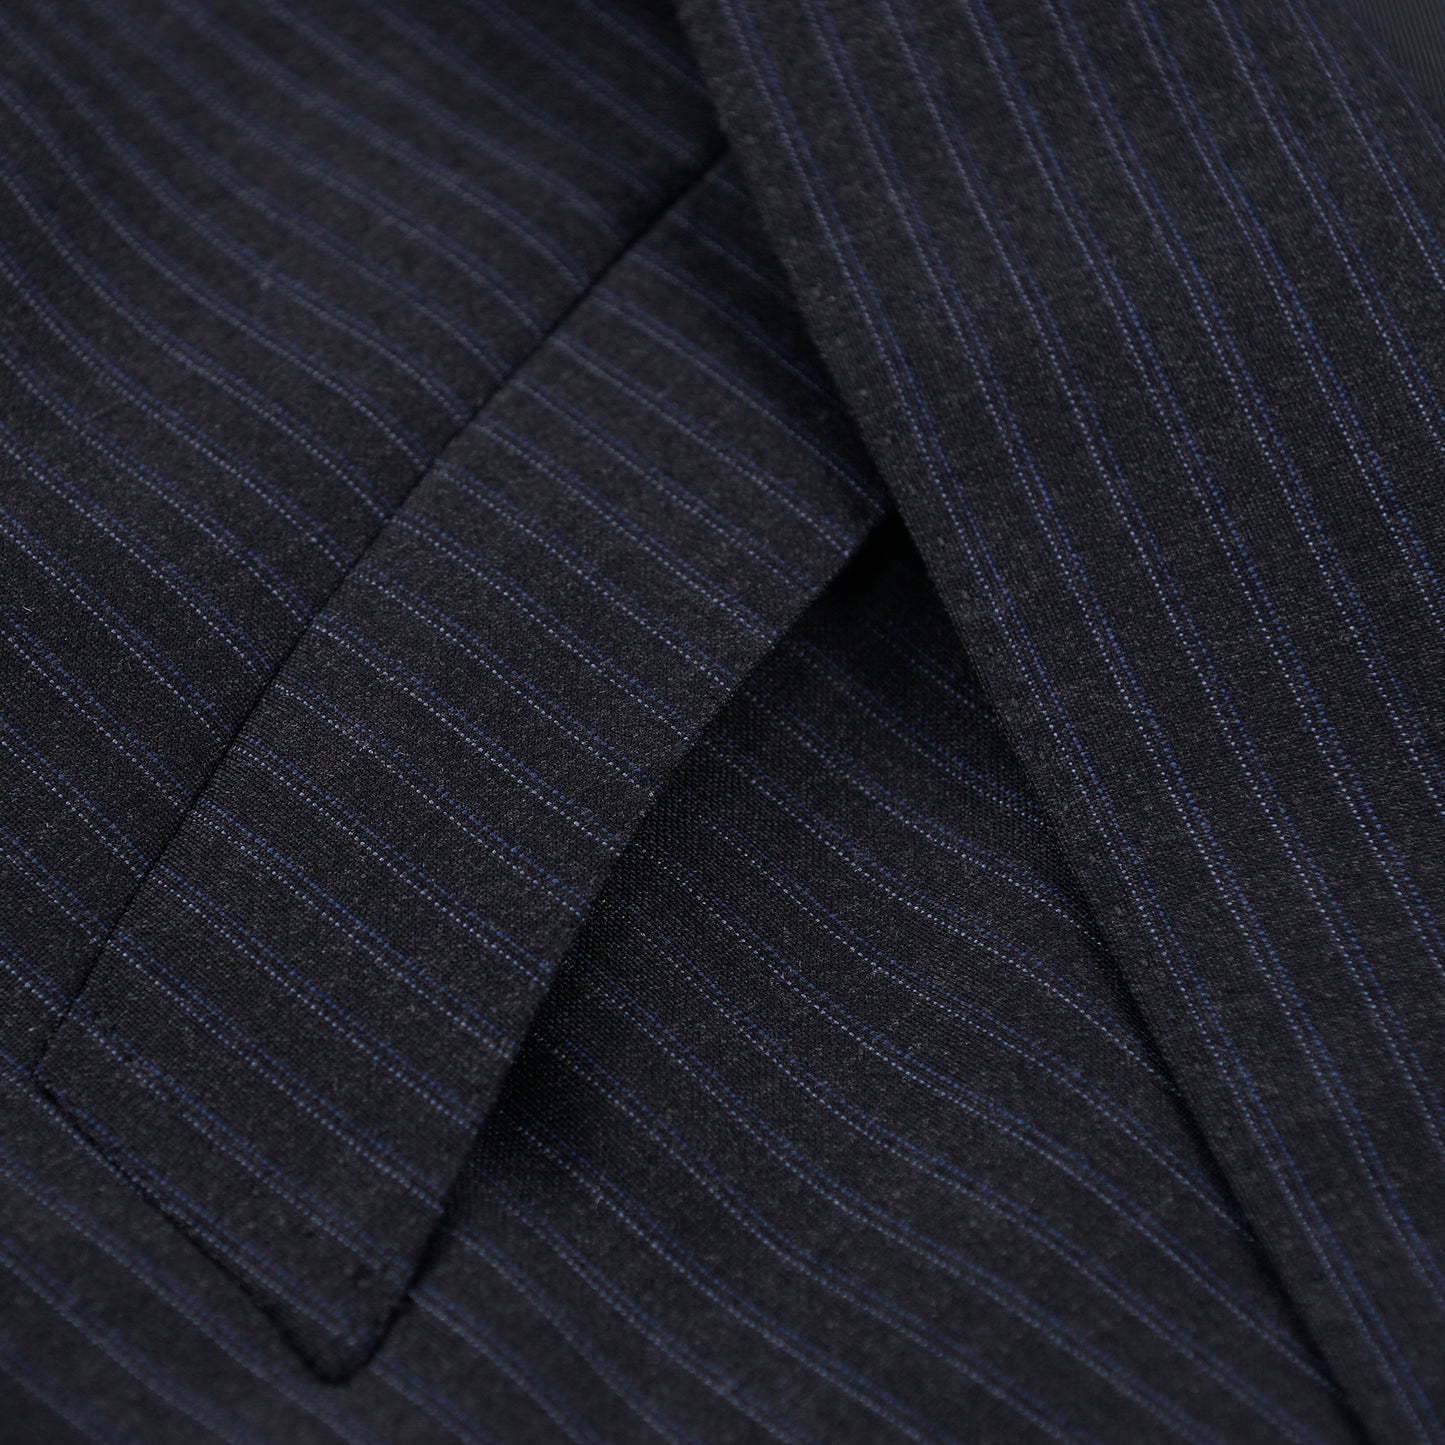 Ermenegildo Zegna Charcoal Gray Striped Wool Suit - Top Shelf Apparel